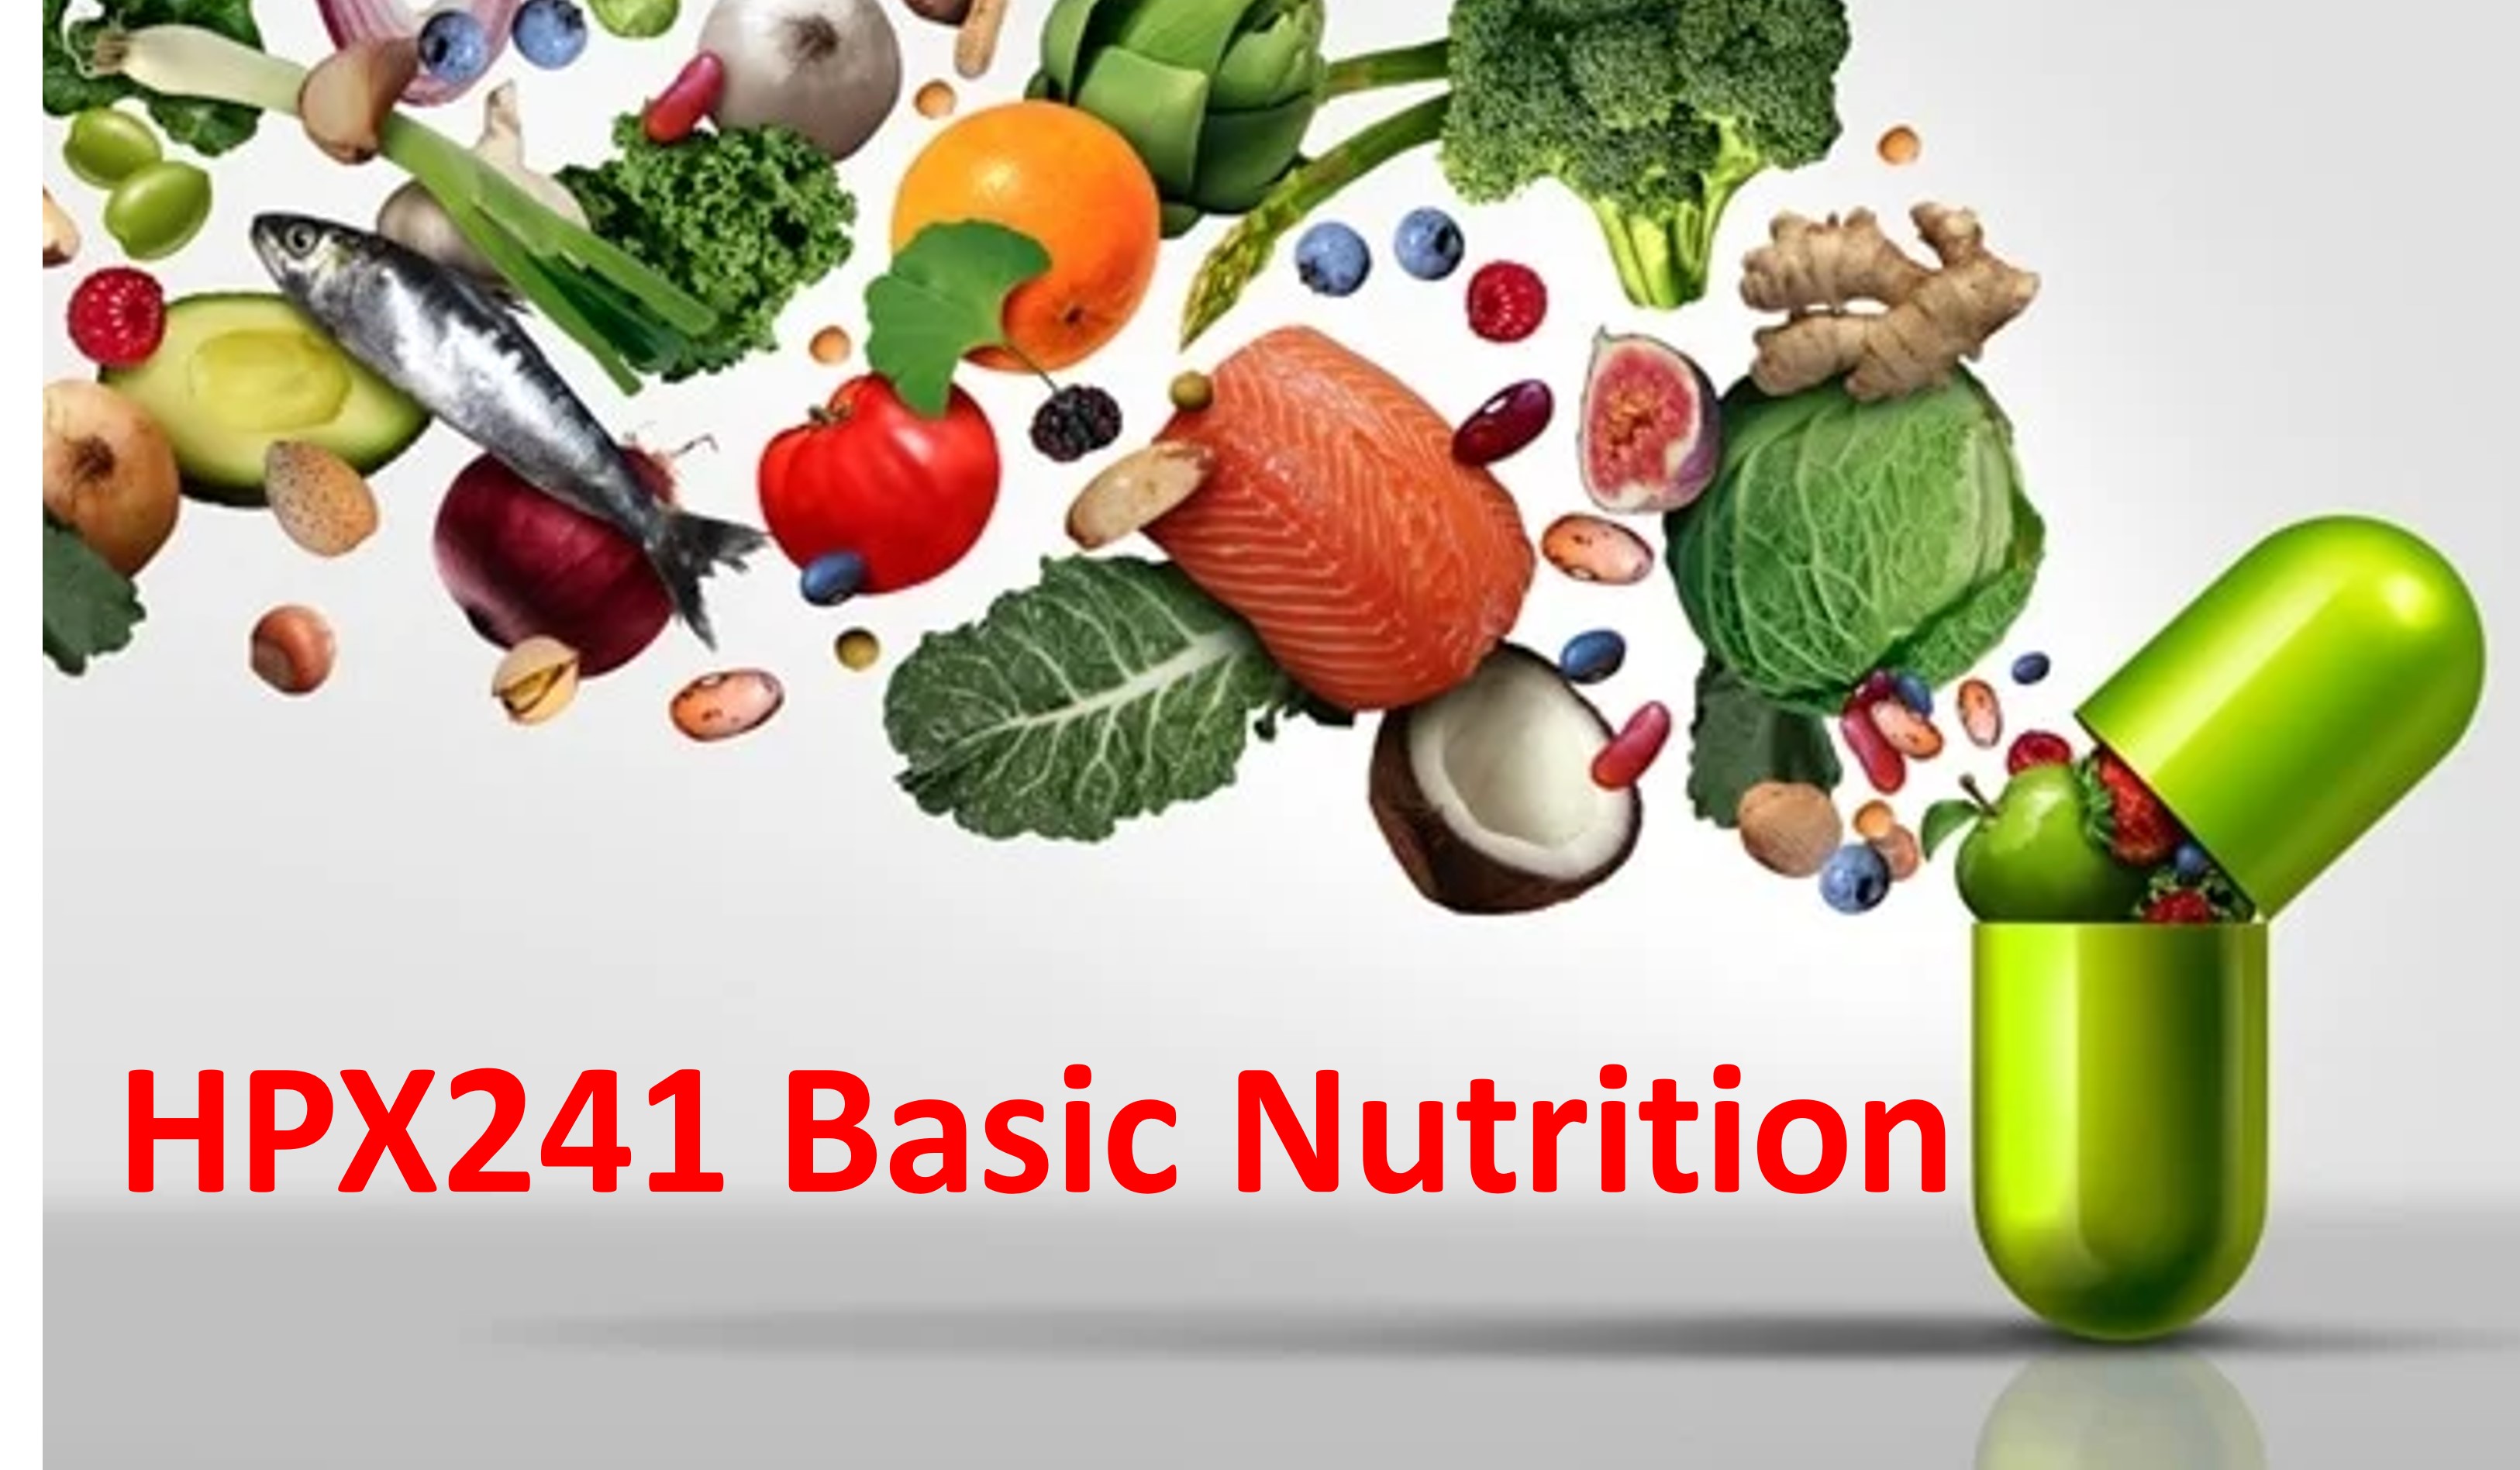 HPX241 Basic Nutrition